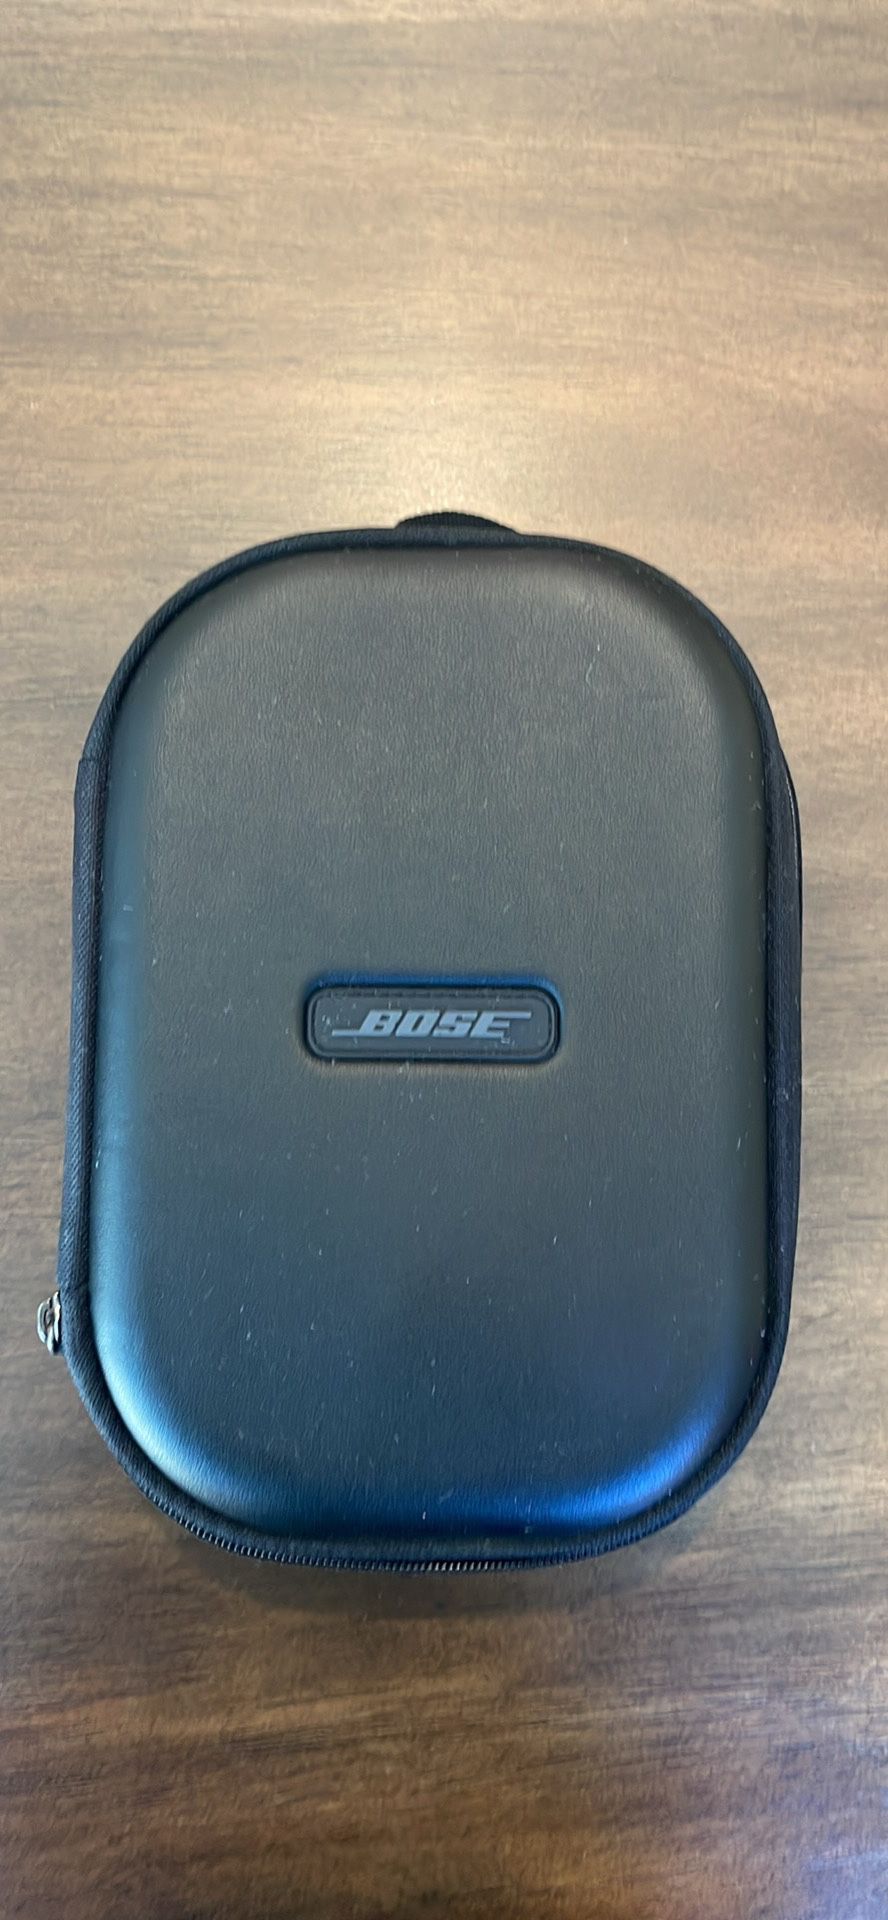 Bose QC headphones carry hard case